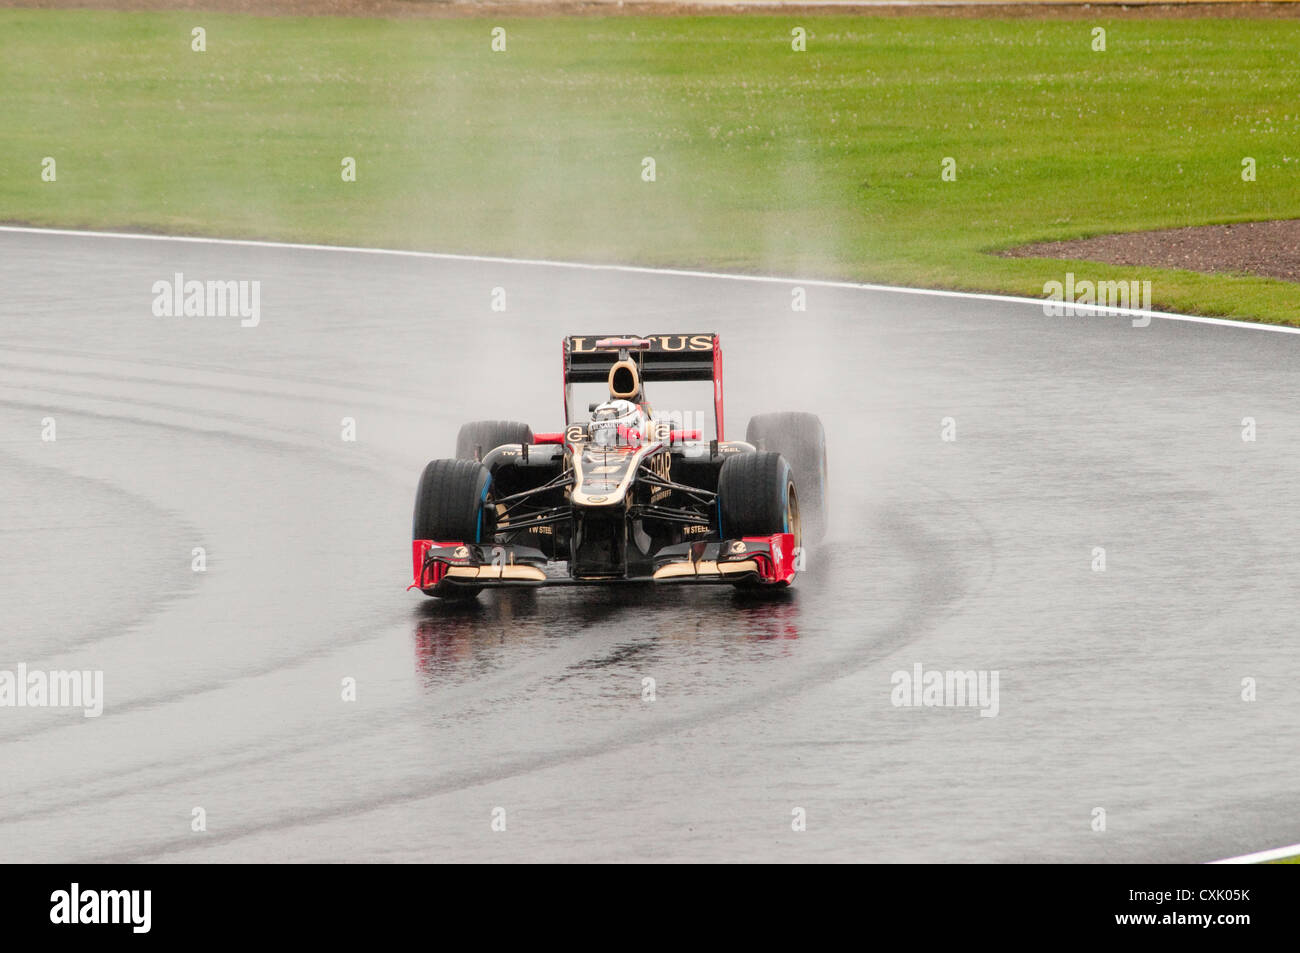 Kimi Raikkonen nella sua Lotus F1 auto sul bagnato Foto Stock